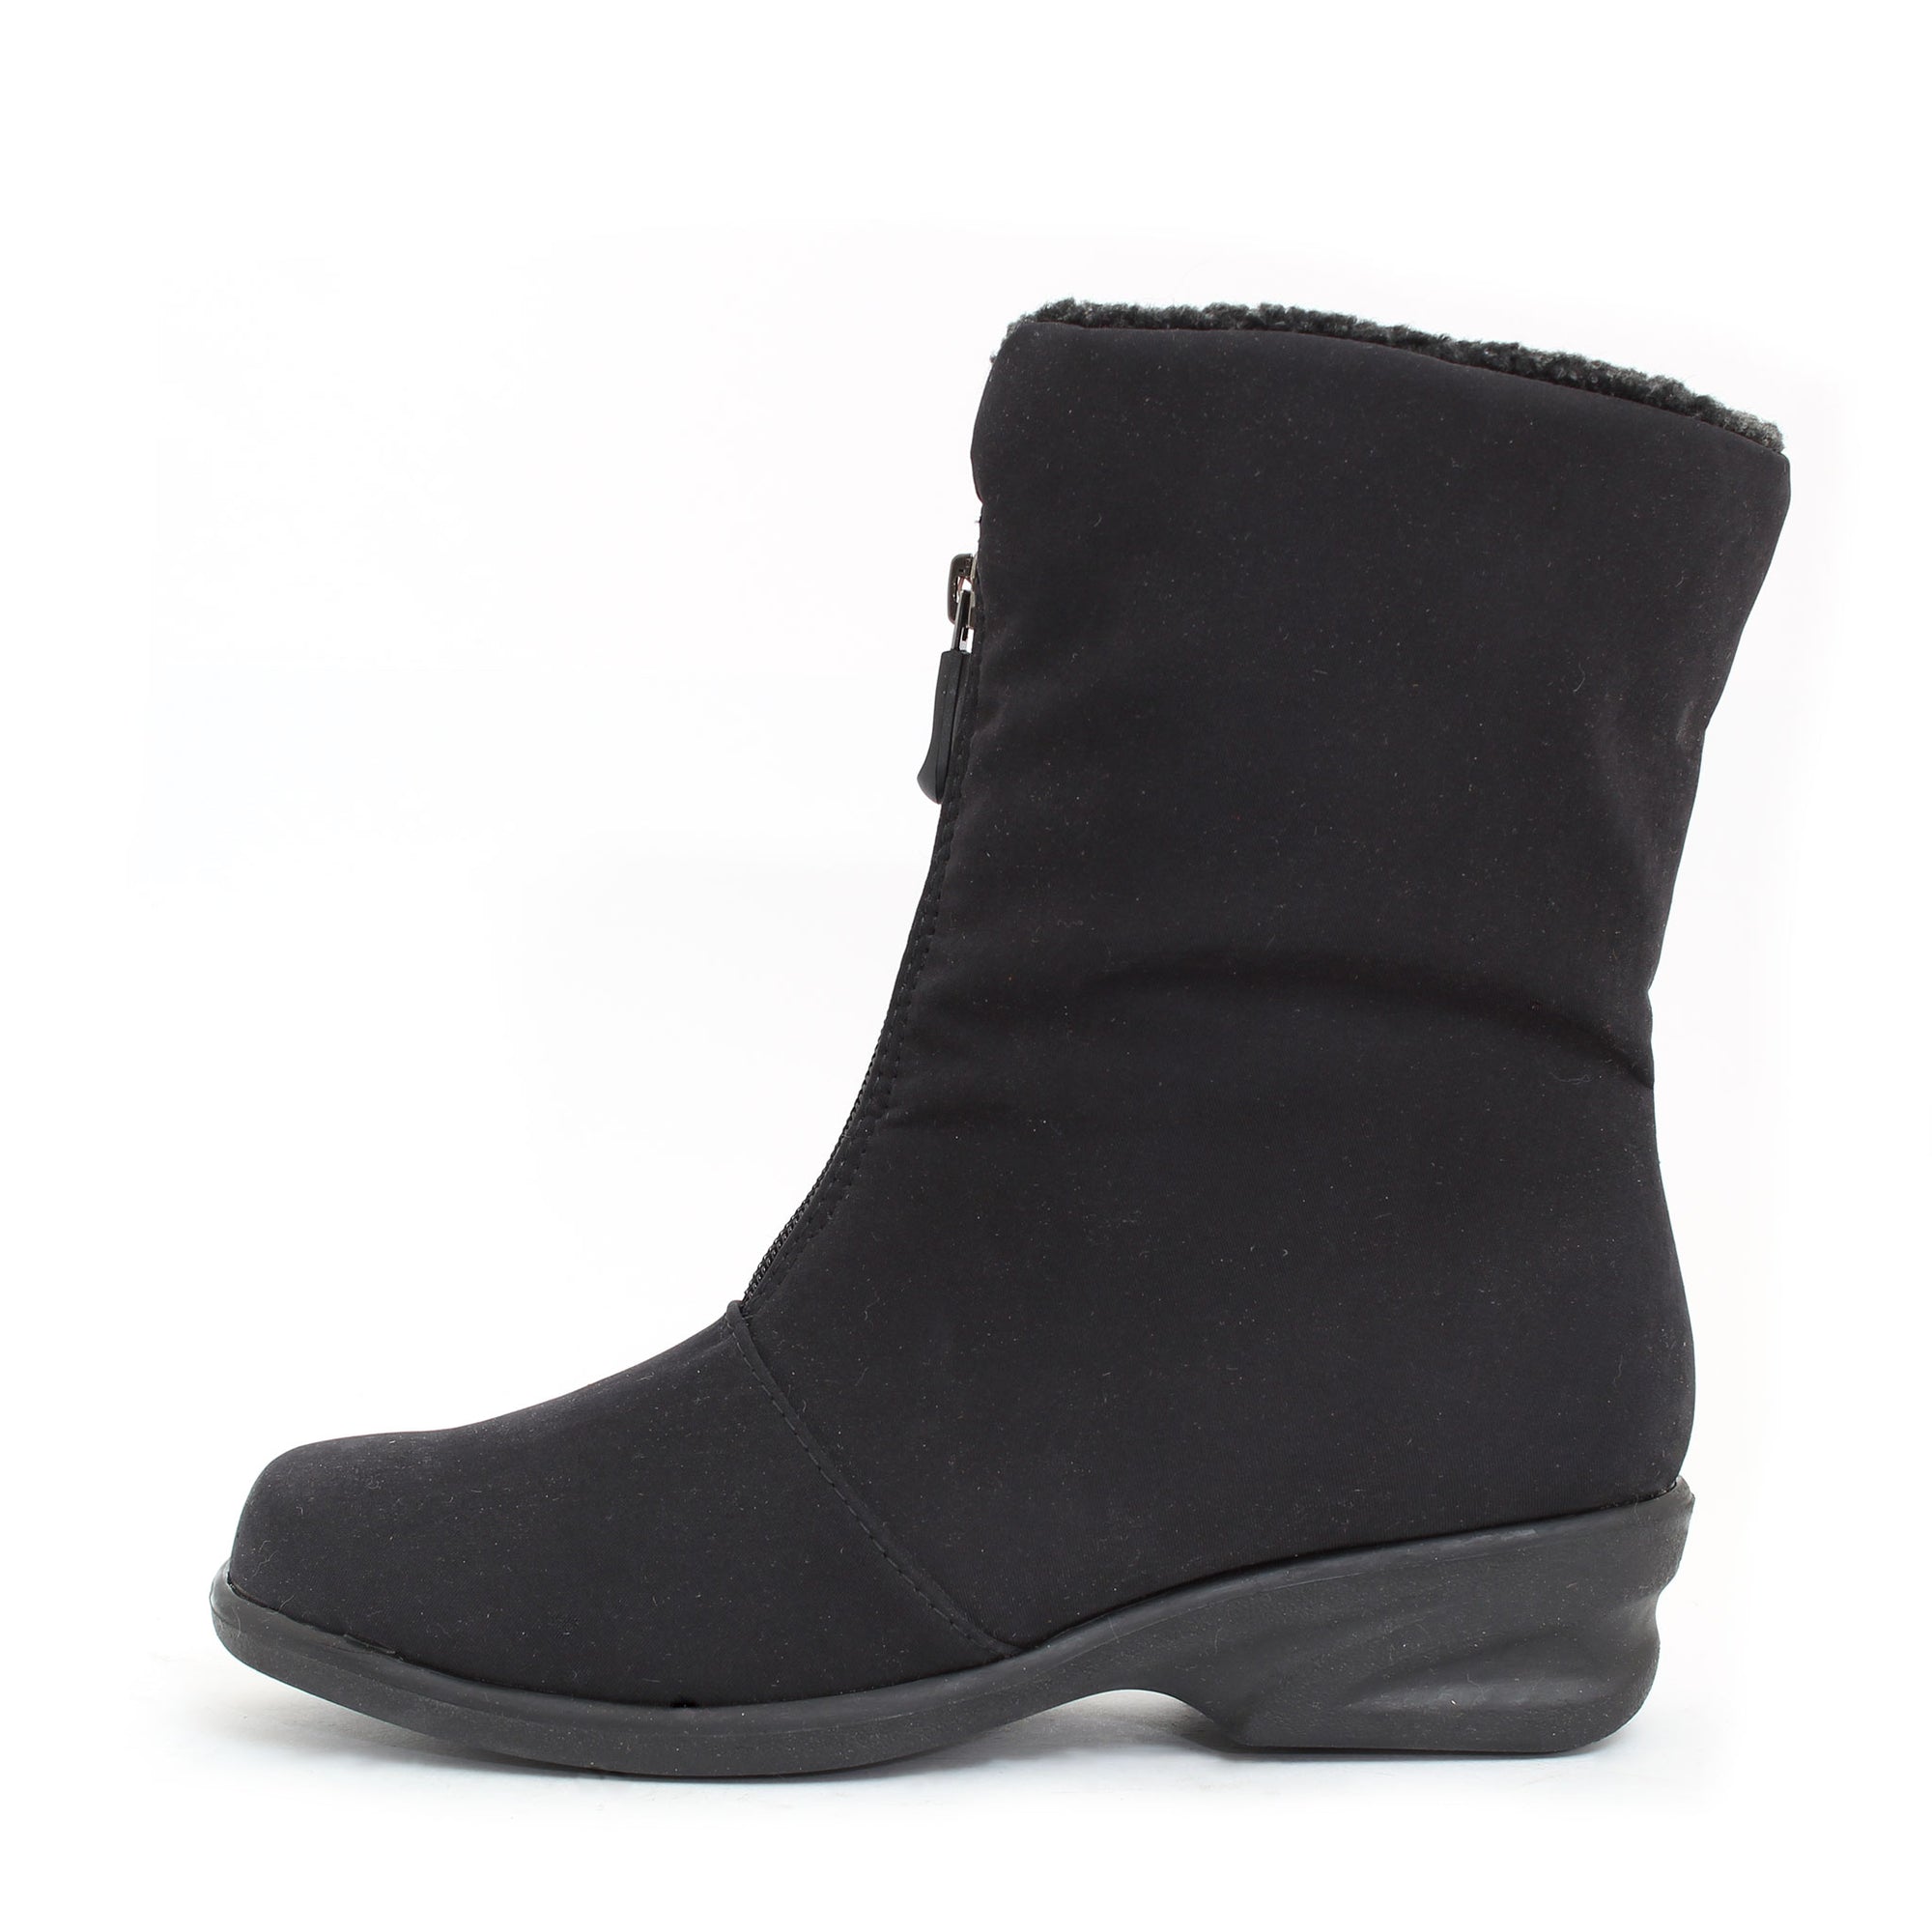 Michelle winter boot for women - Black